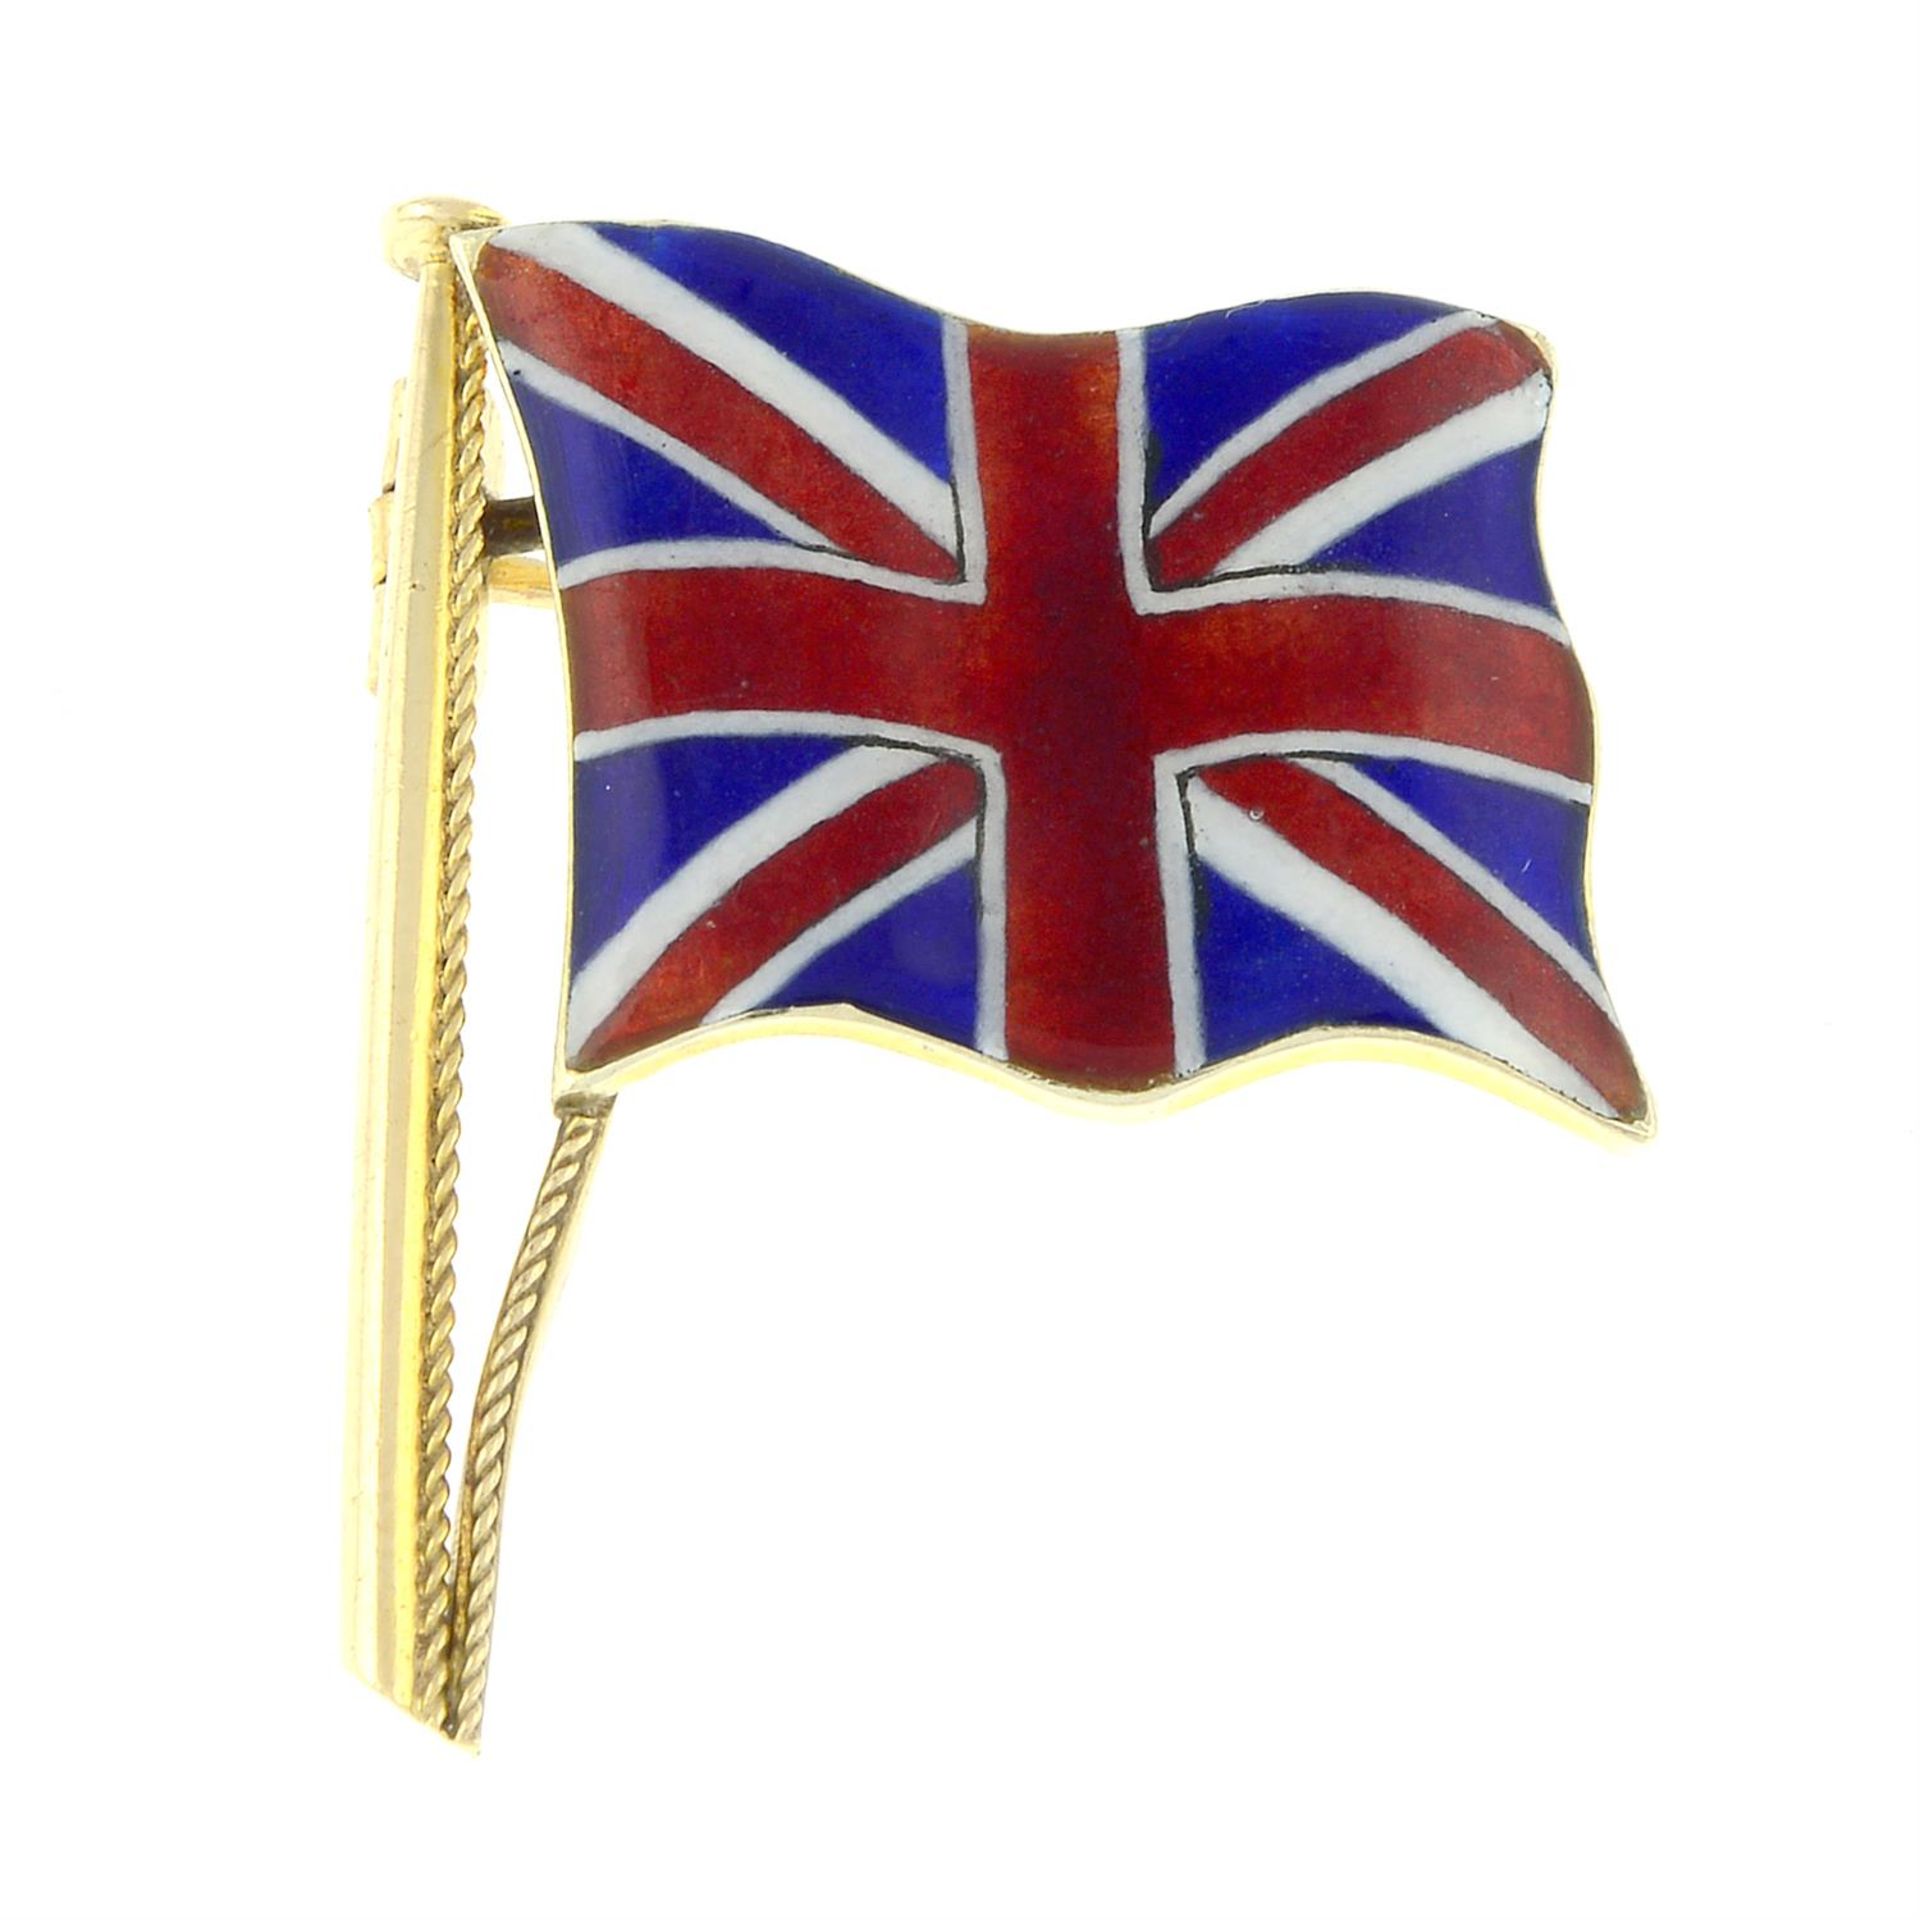 A 9ct gold enamel Union Jack brooch.